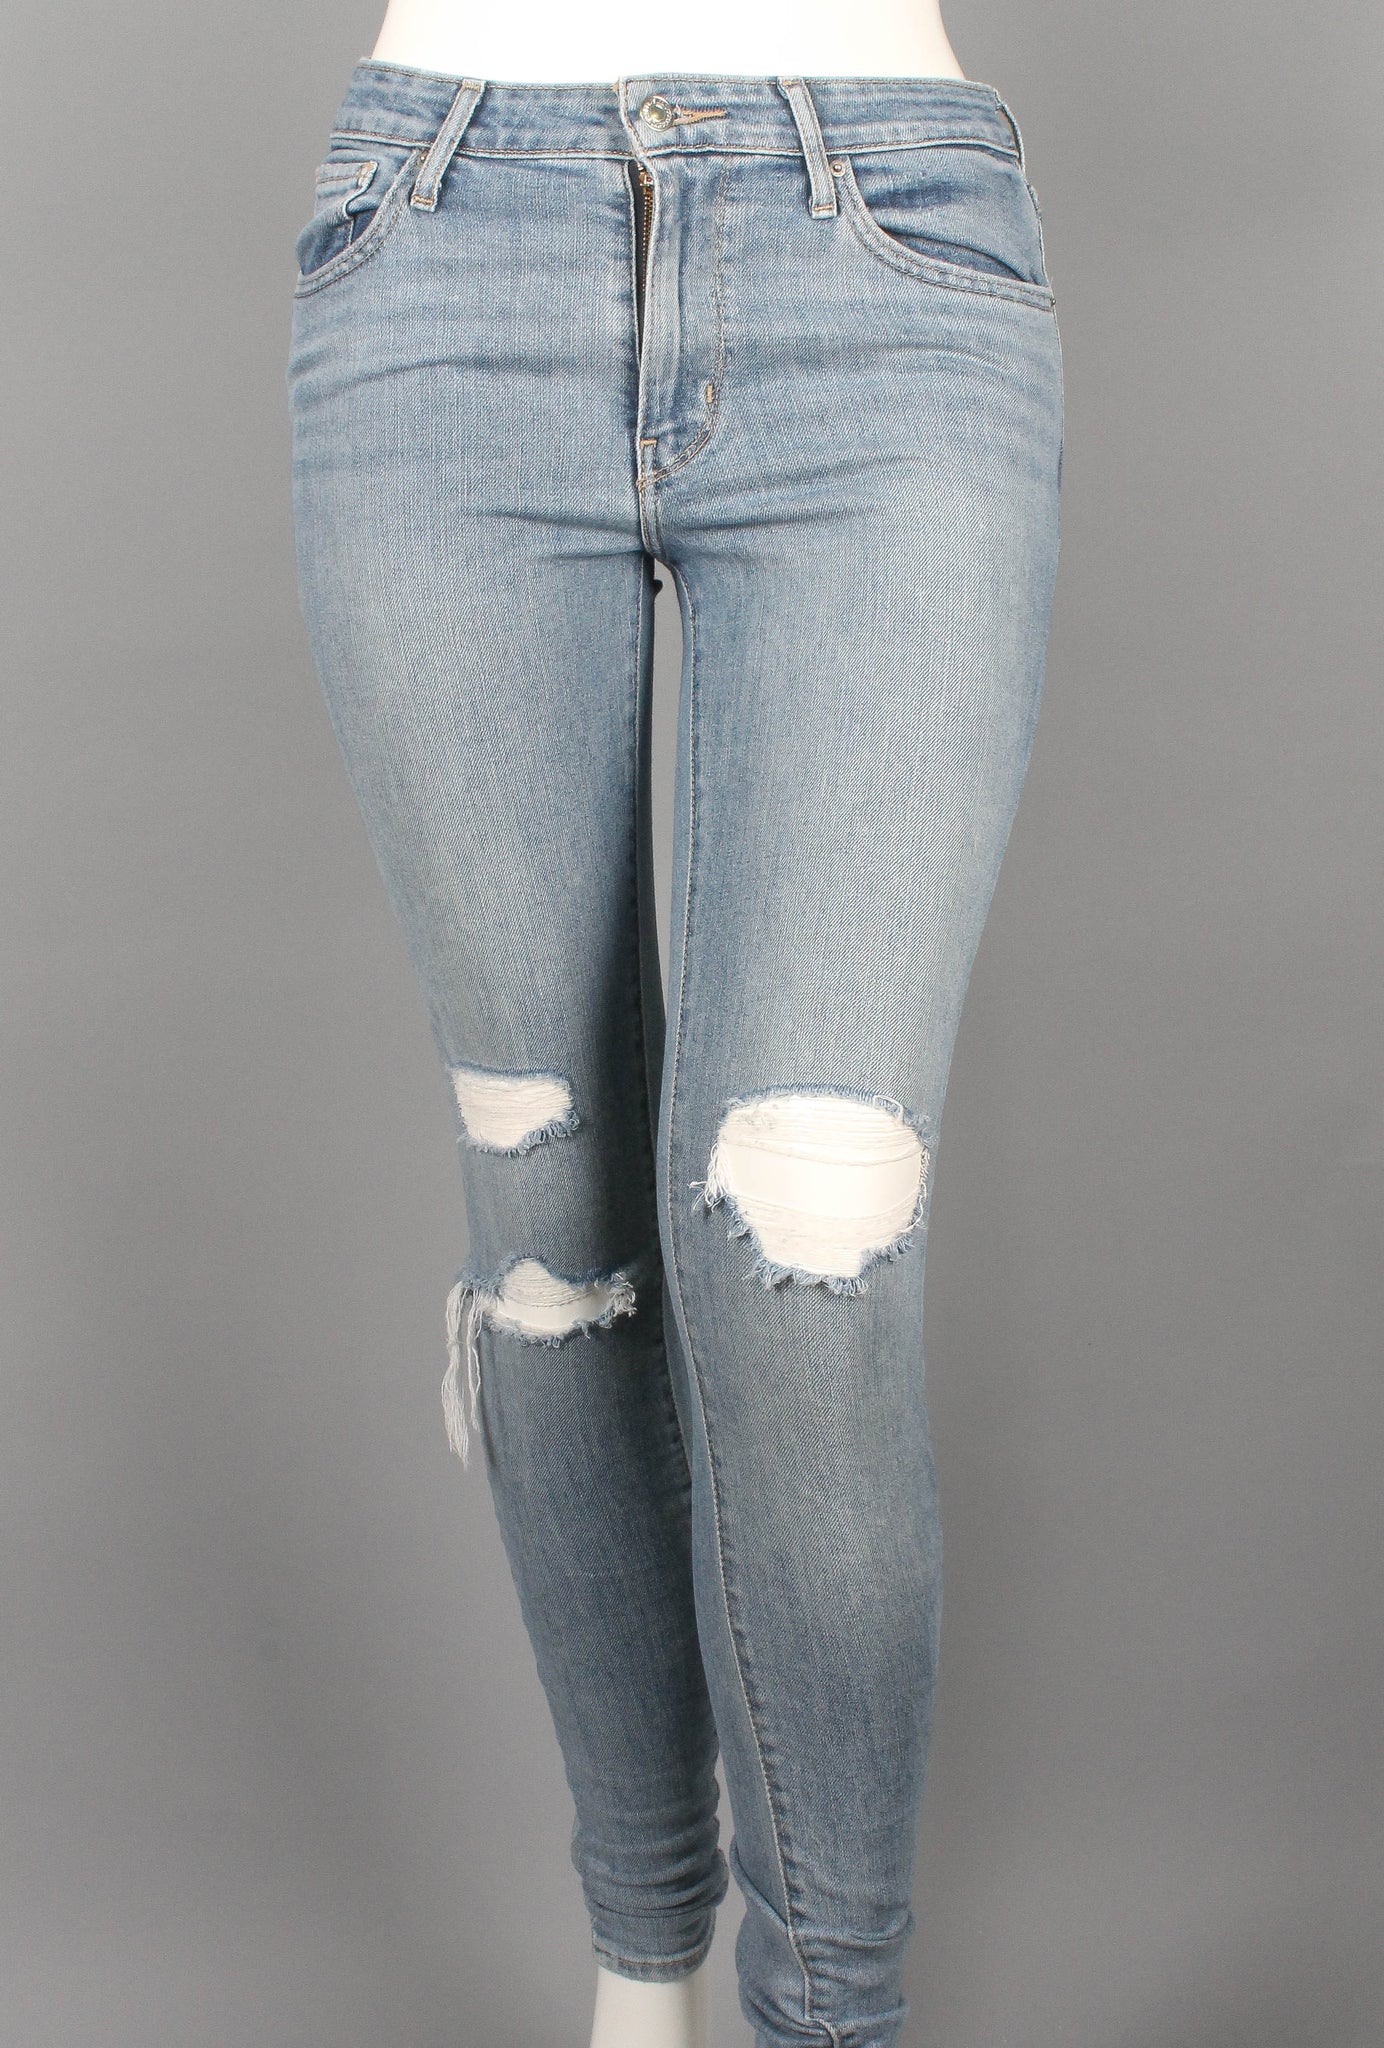 LEVI'S - Skinny Jeans Azules Rotos De Las Rodillas